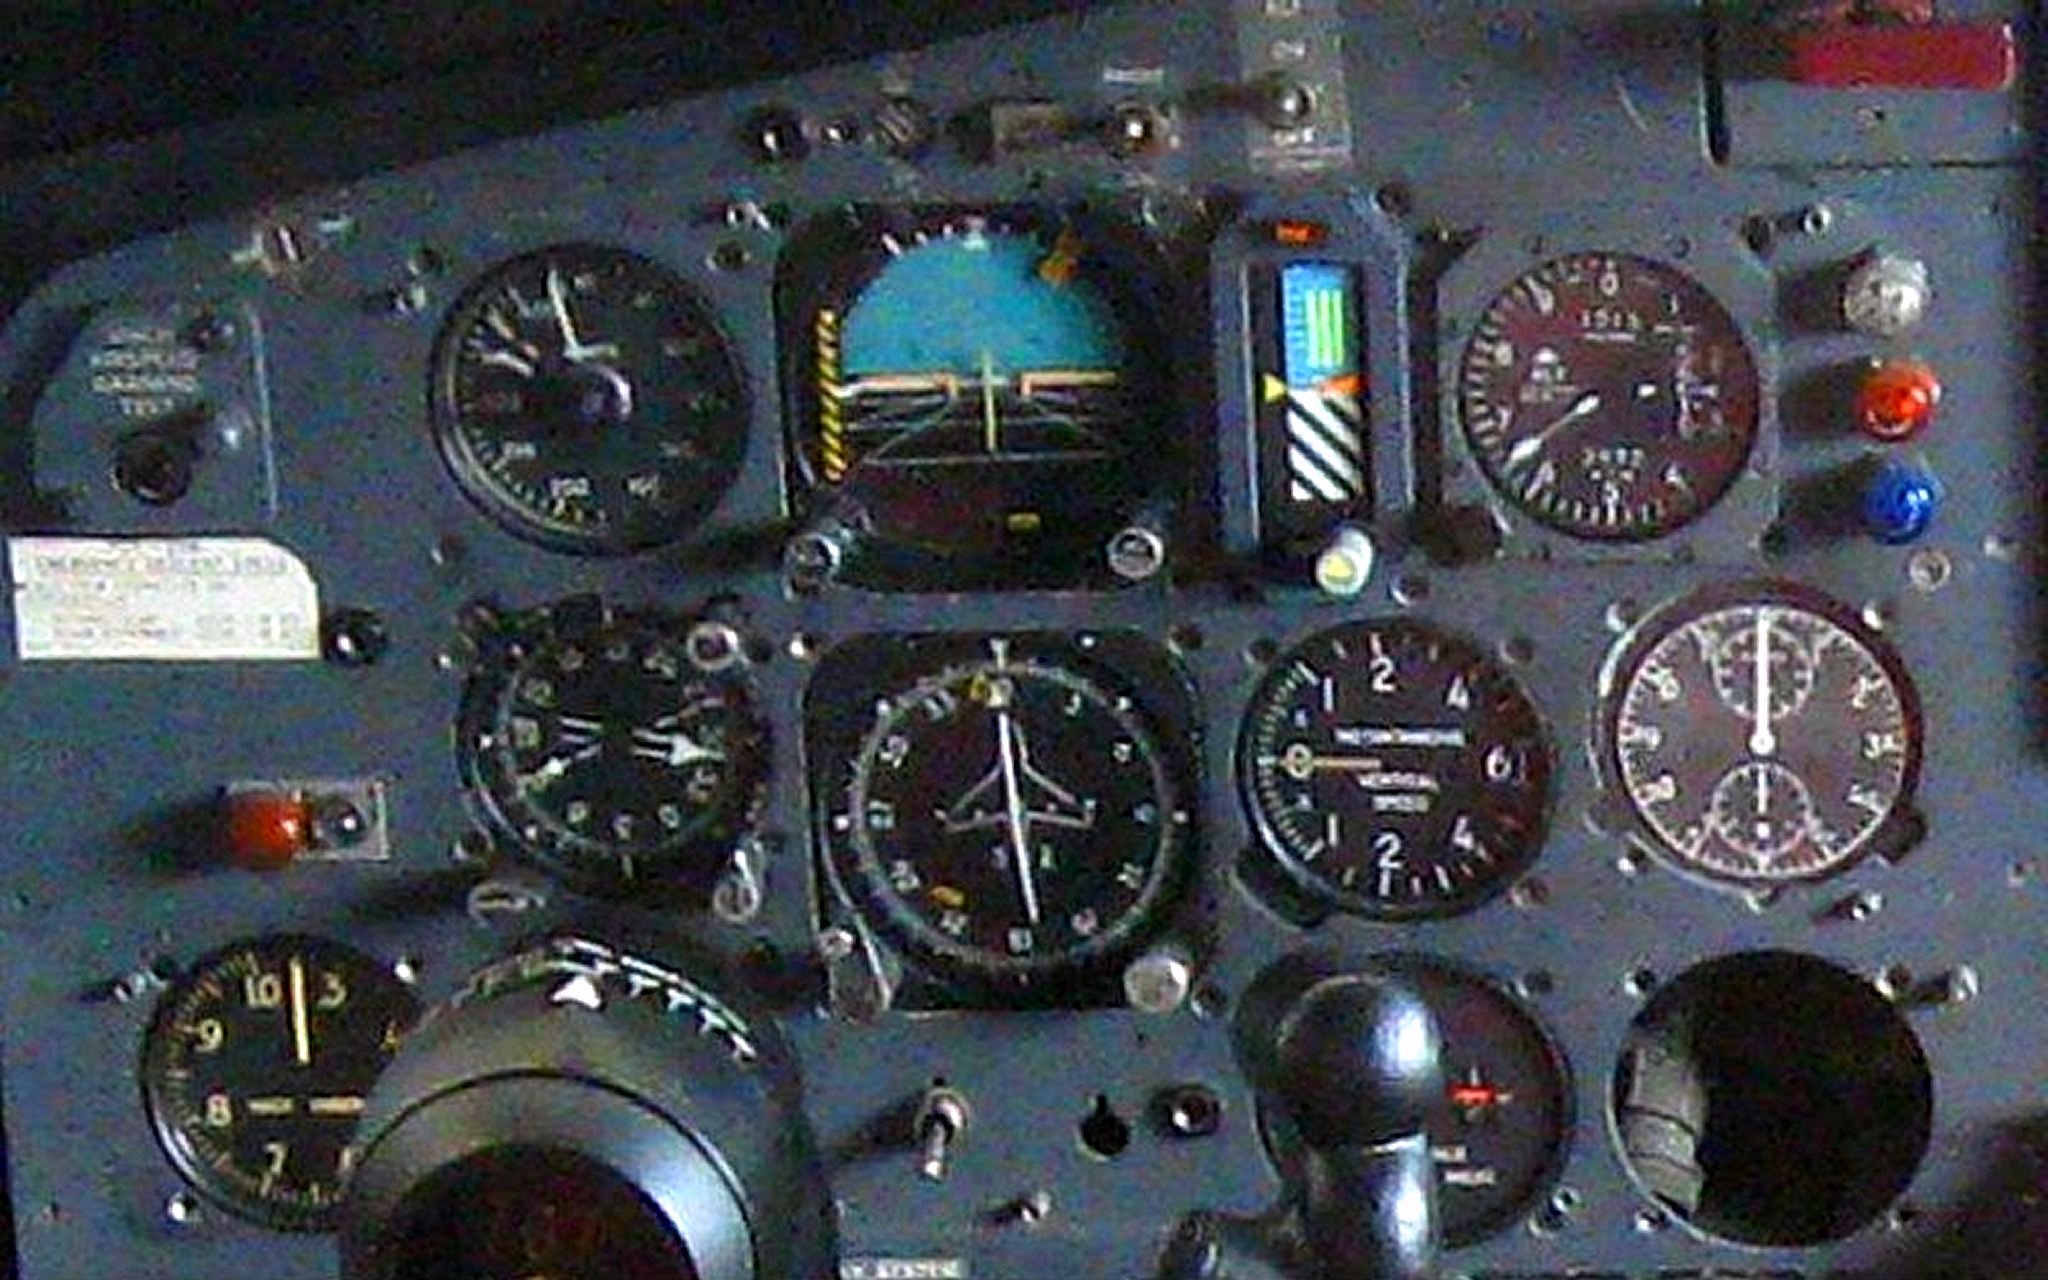 707 Basic "T" panel